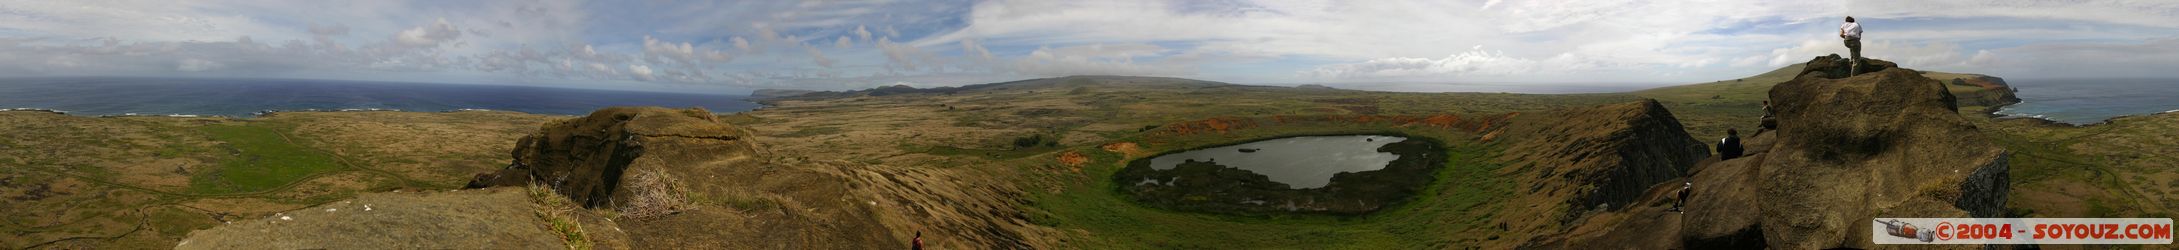 Ile de Paques - Rano Raraku - panorama
Mots-clés: chile Ile de Paques Easter Island patrimoine unesco panorama volcan Lac